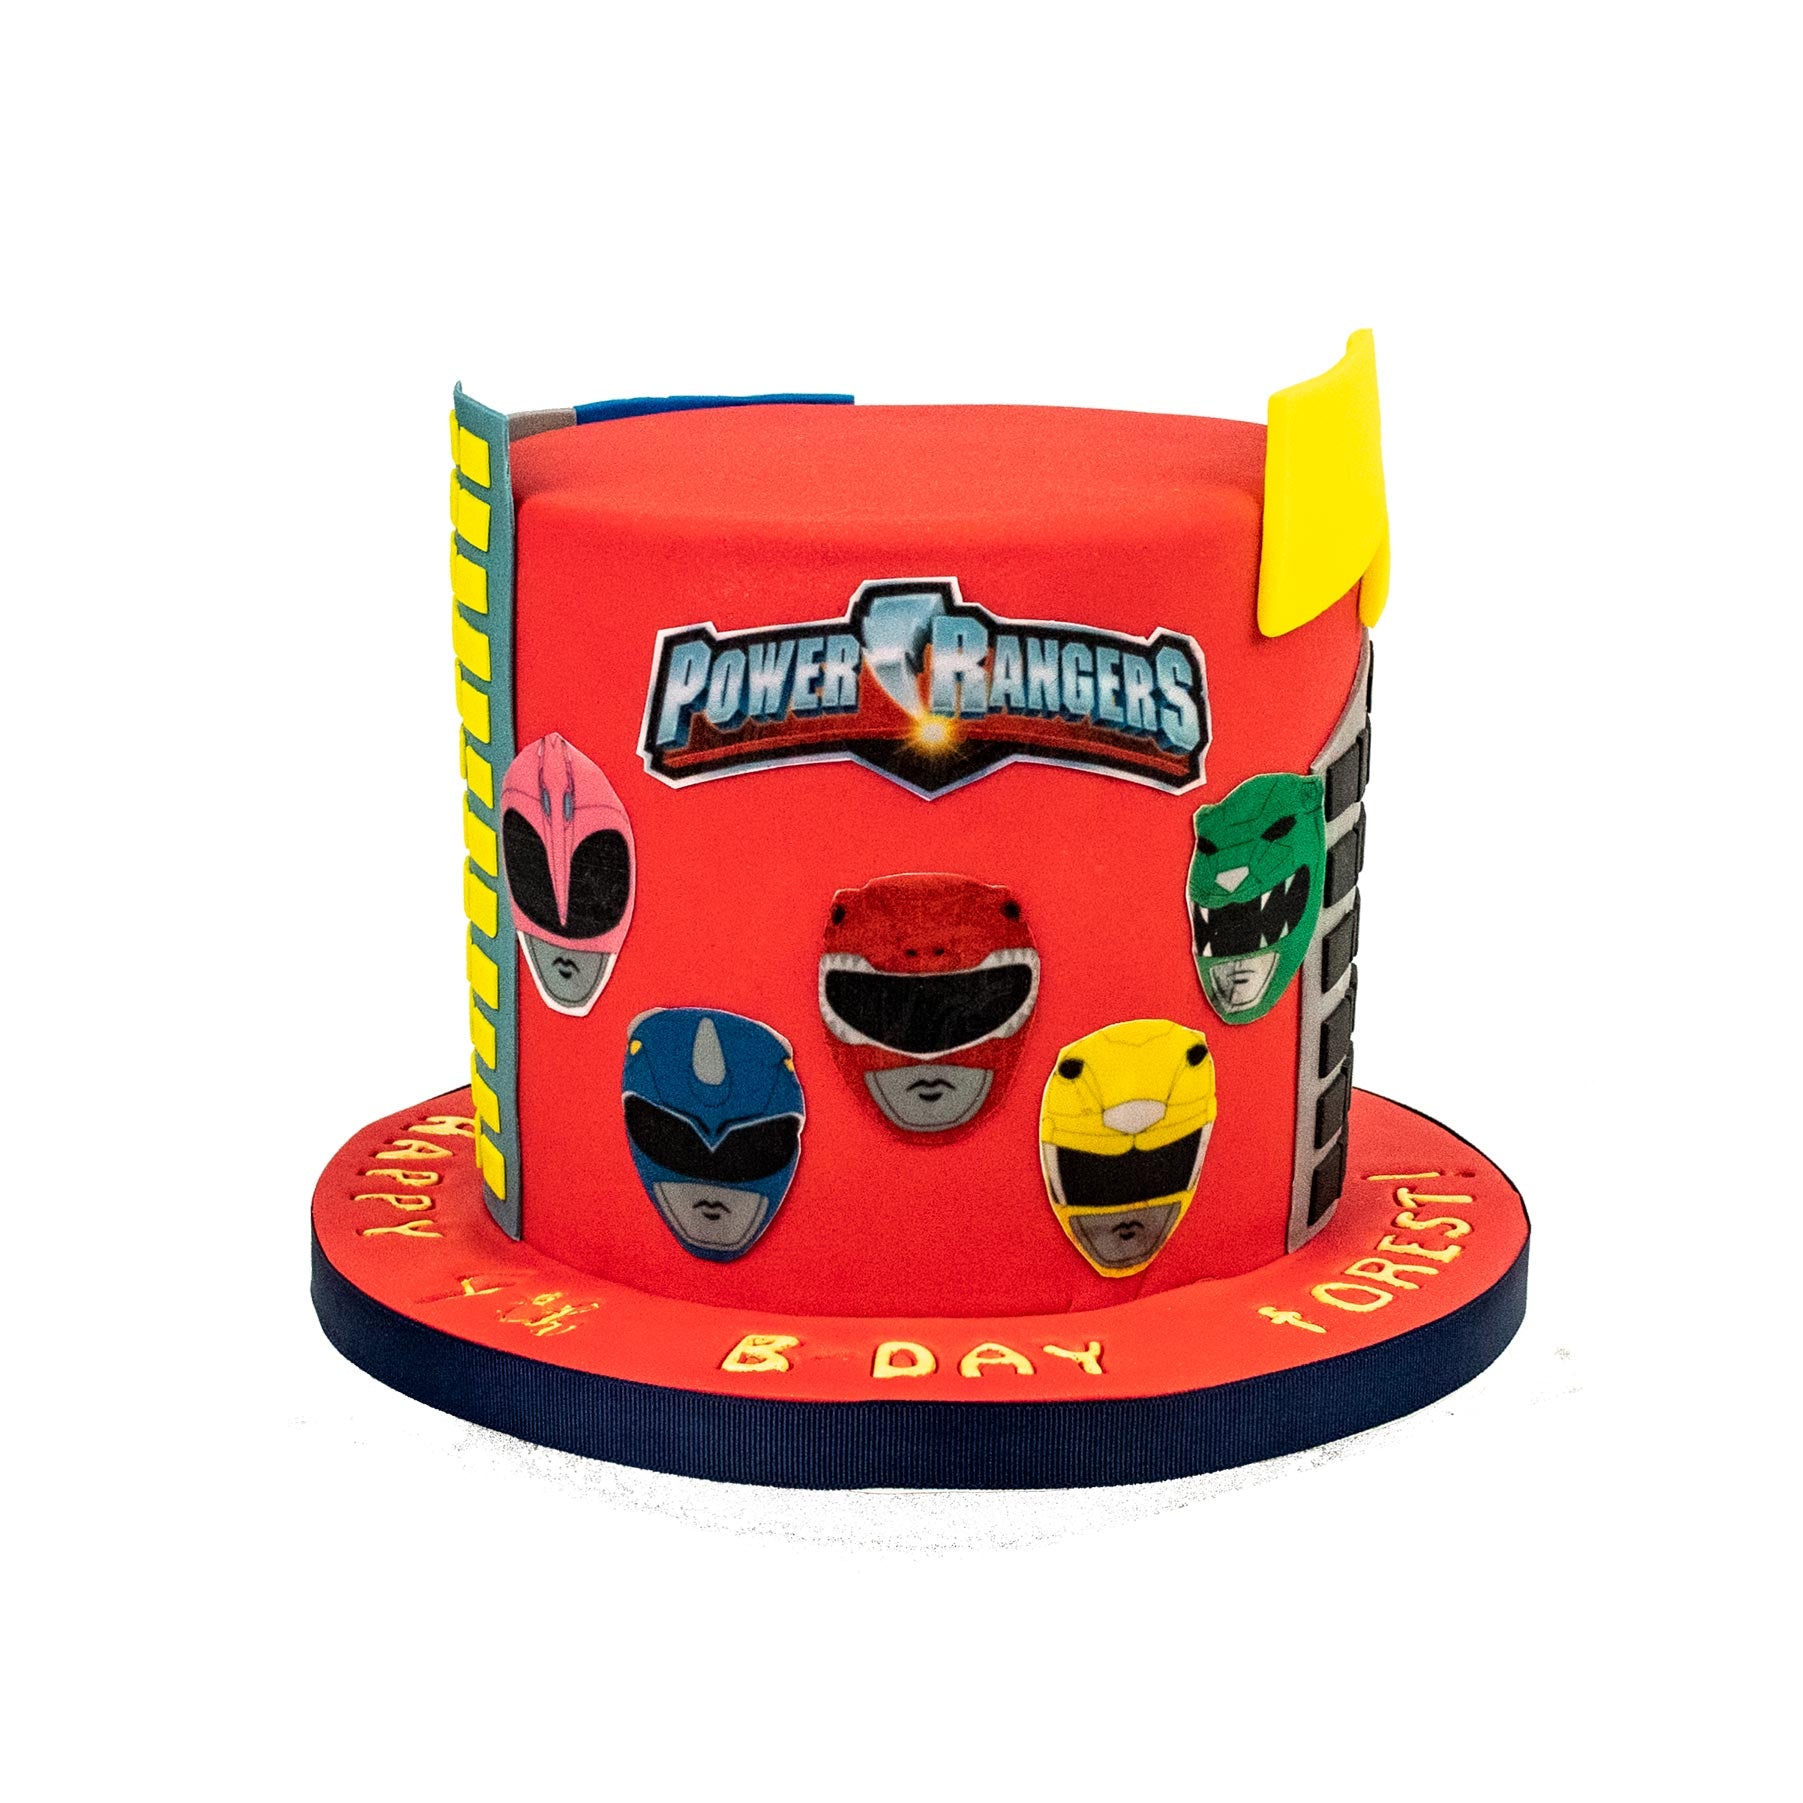 Power Rangers cake decorated by @perez331. #cake #instacak… | Flickr